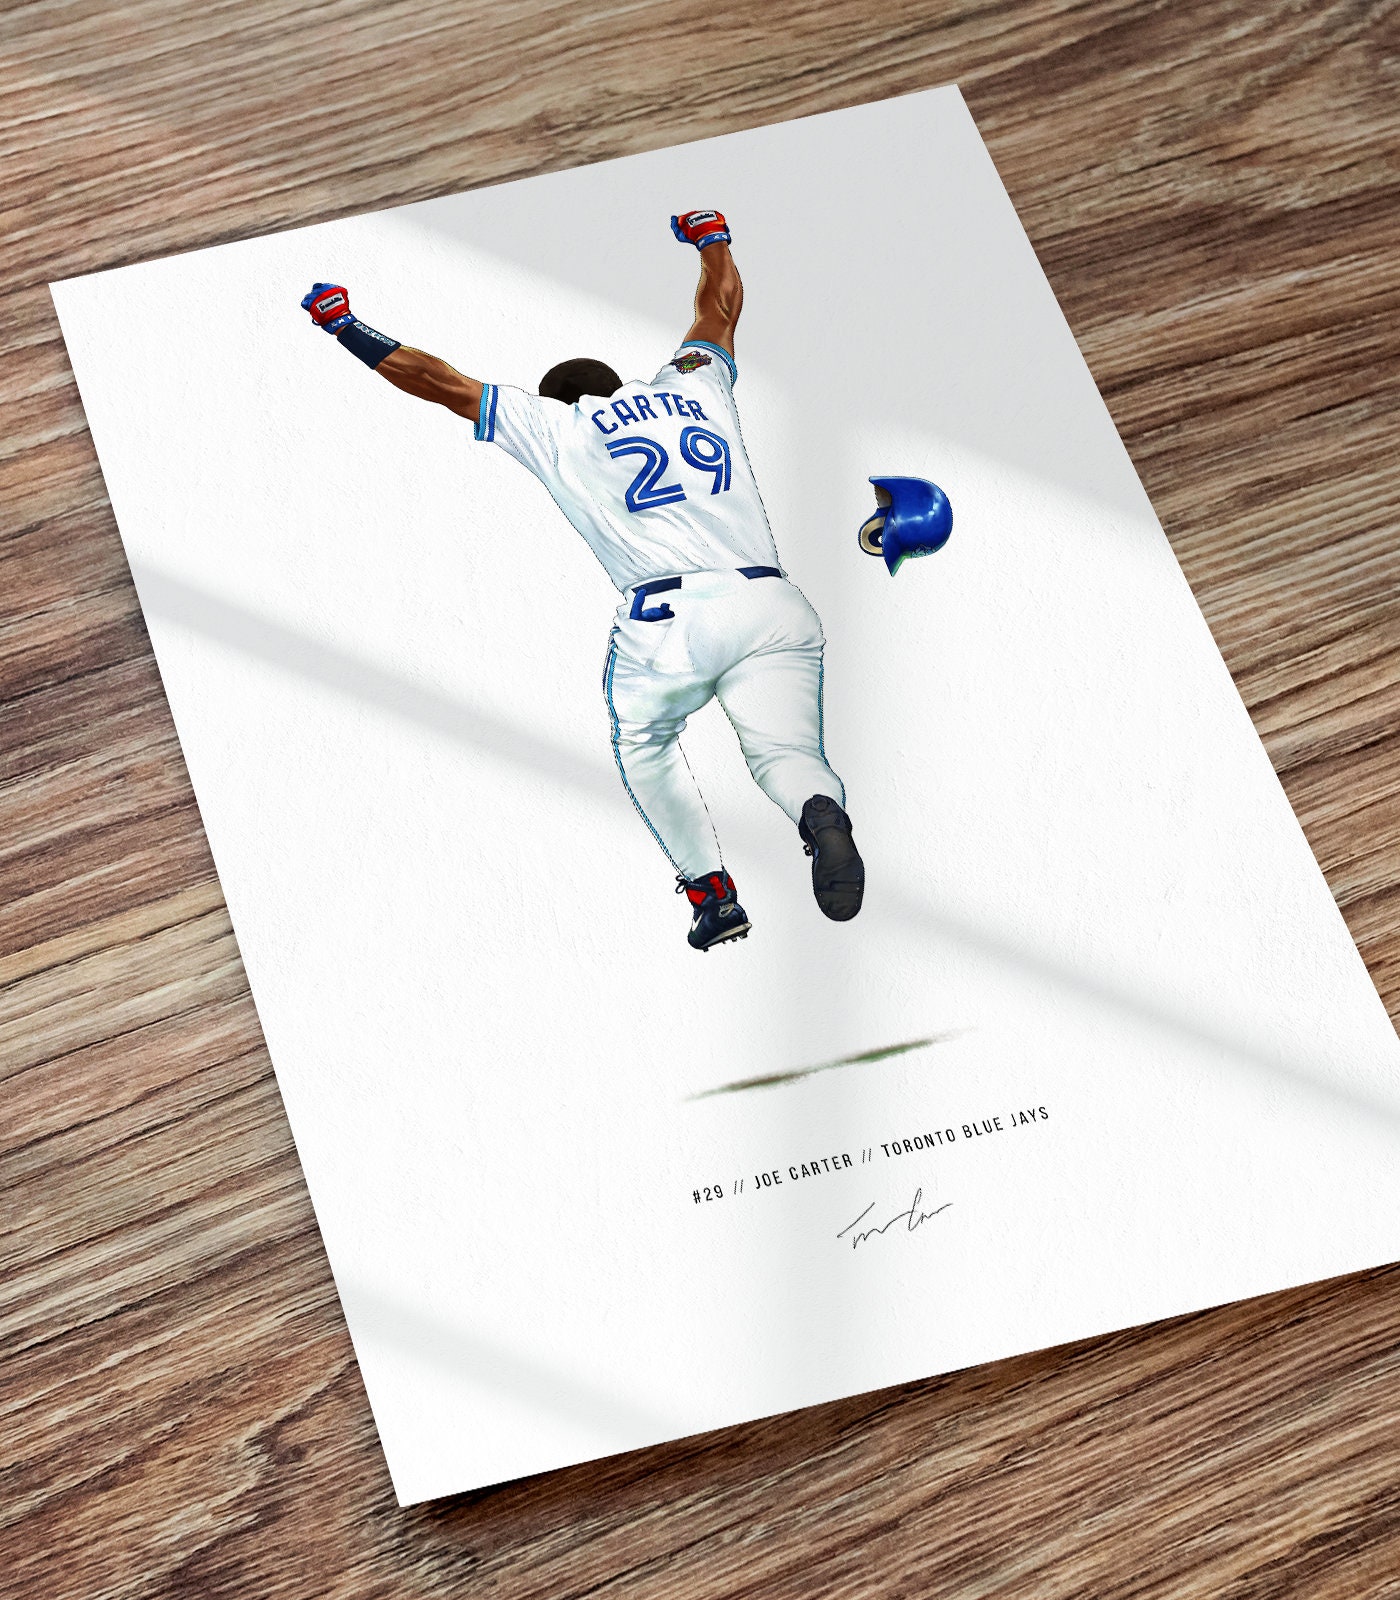 Joe Carter 1993 World Series Home Run Poster Toronto Blue Jays 